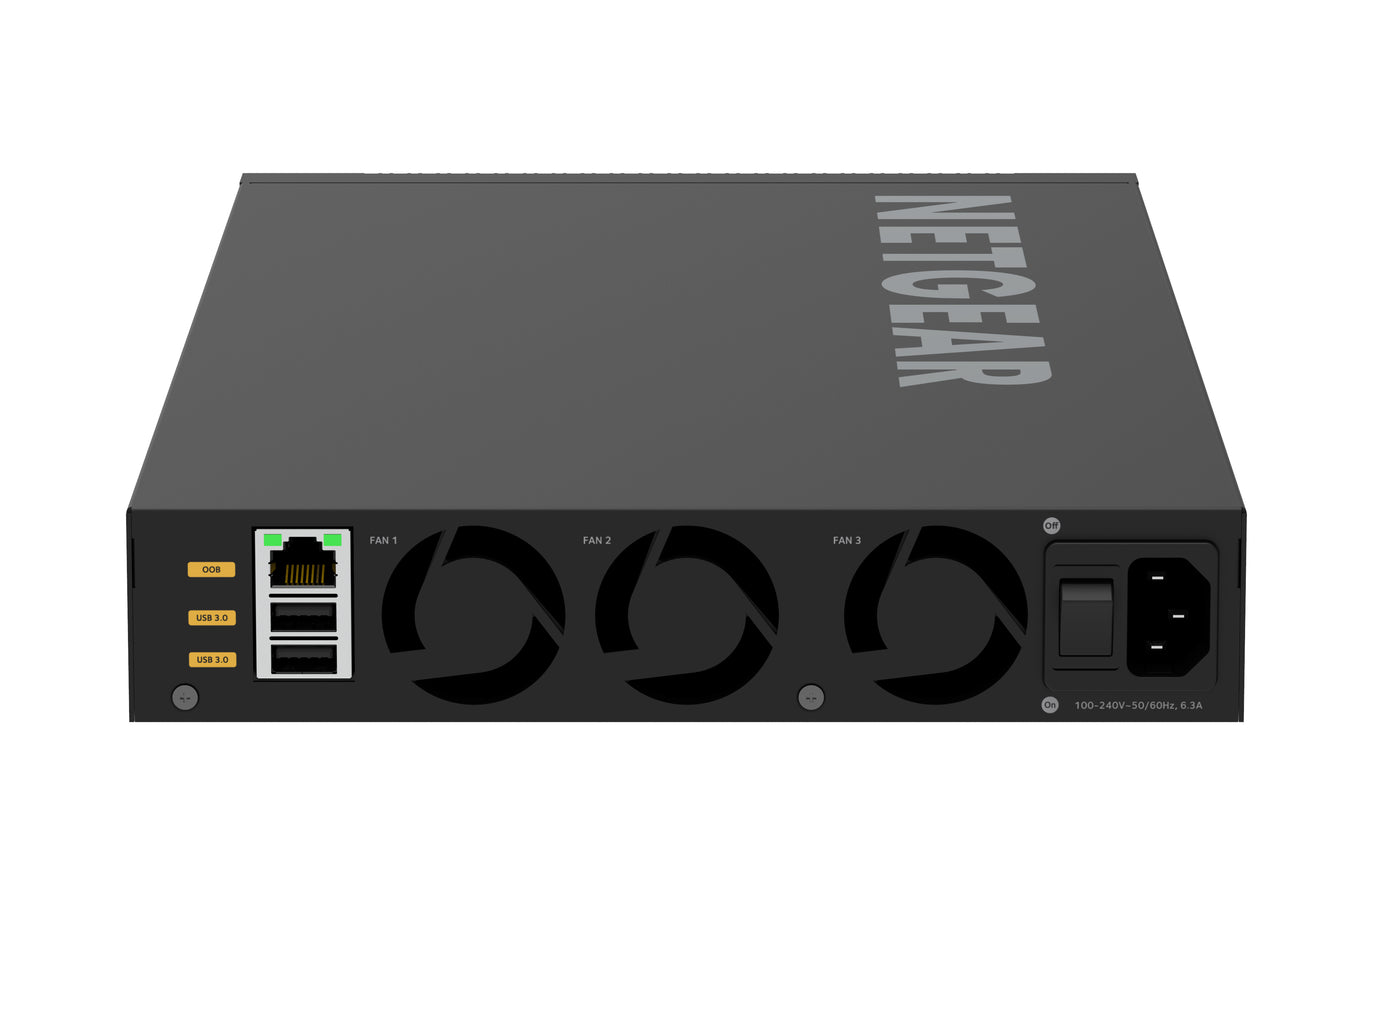 NETGEAR M4350 XSM4316 16-Port 8x10G/Multi-Gig and 8xSFP+ Desktop Managed Switch